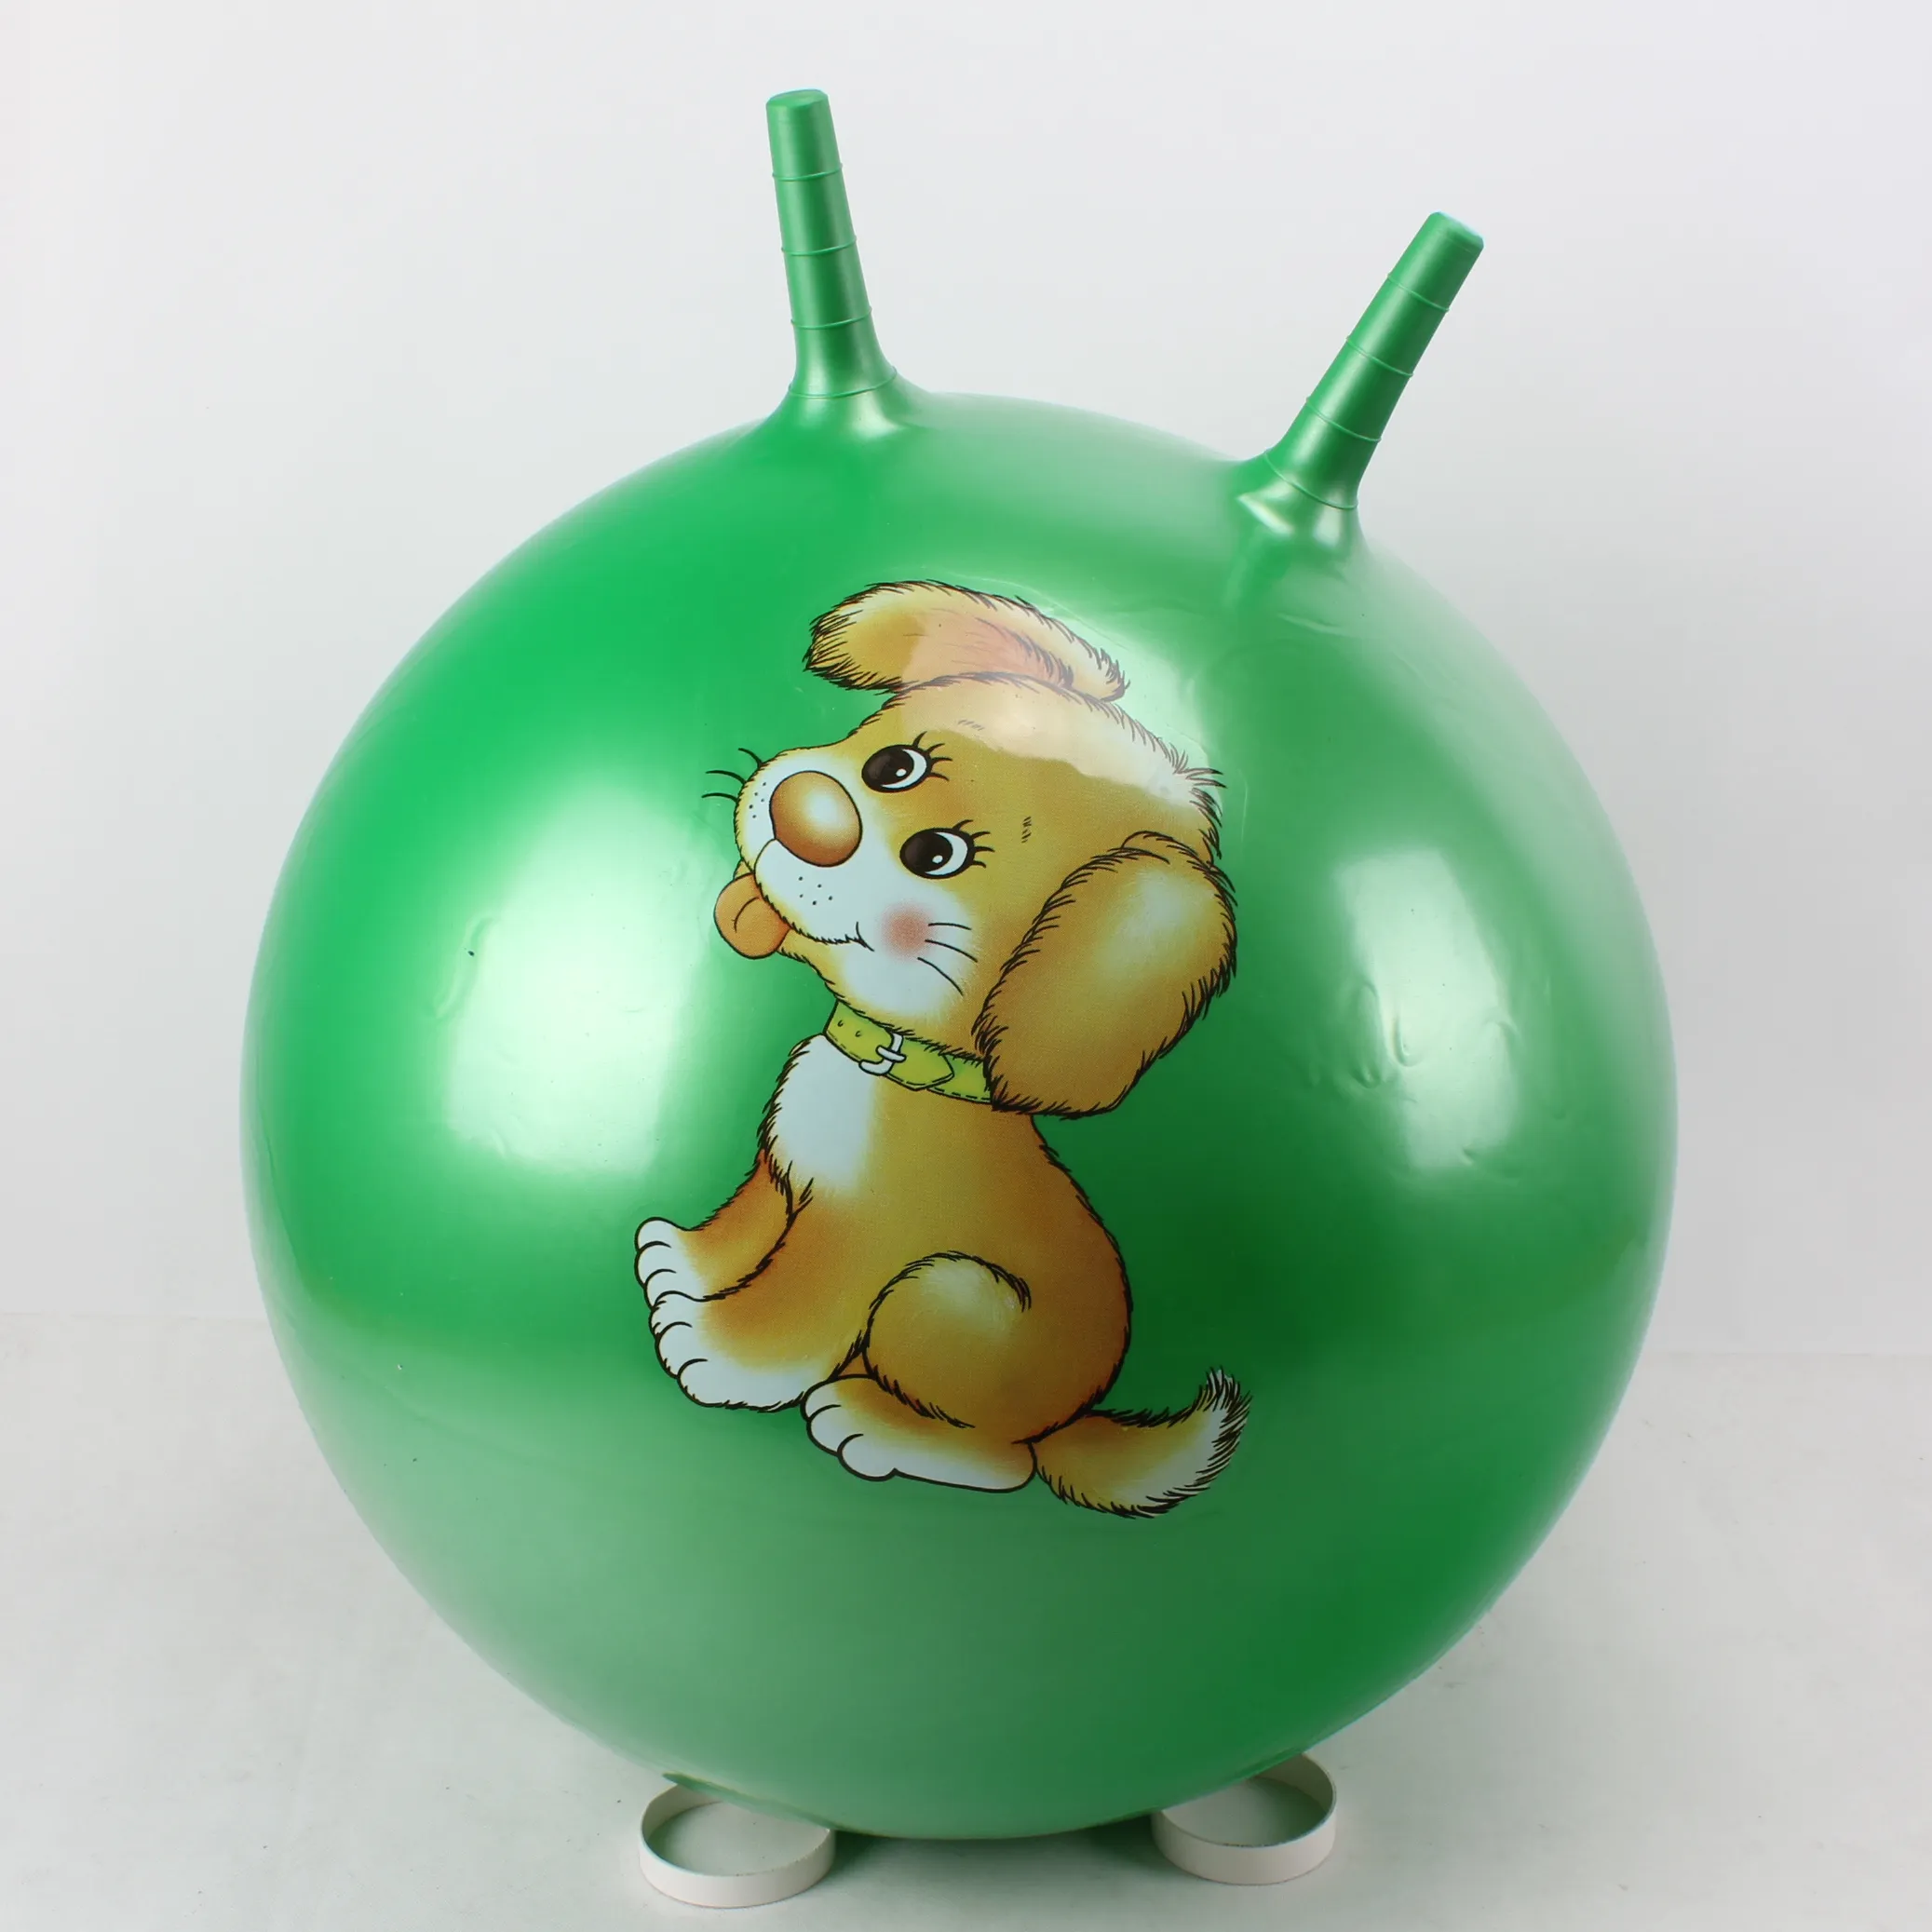 100cm hopper ball wholesale high quality kids pvc toy balls children bouncy handle ball